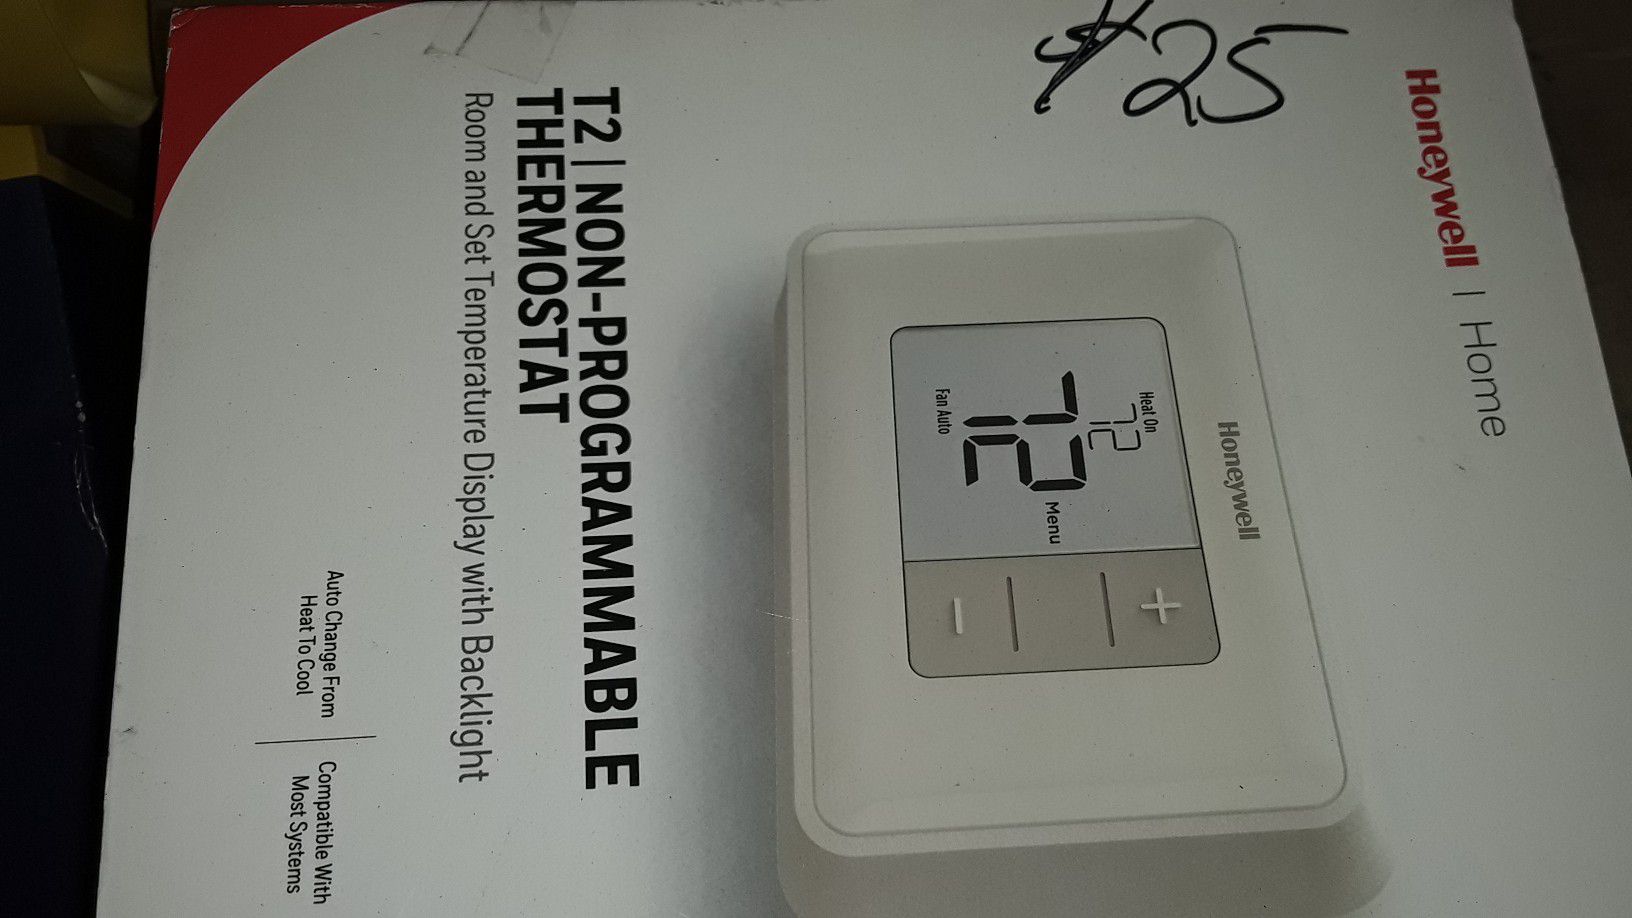 Ac thermostat